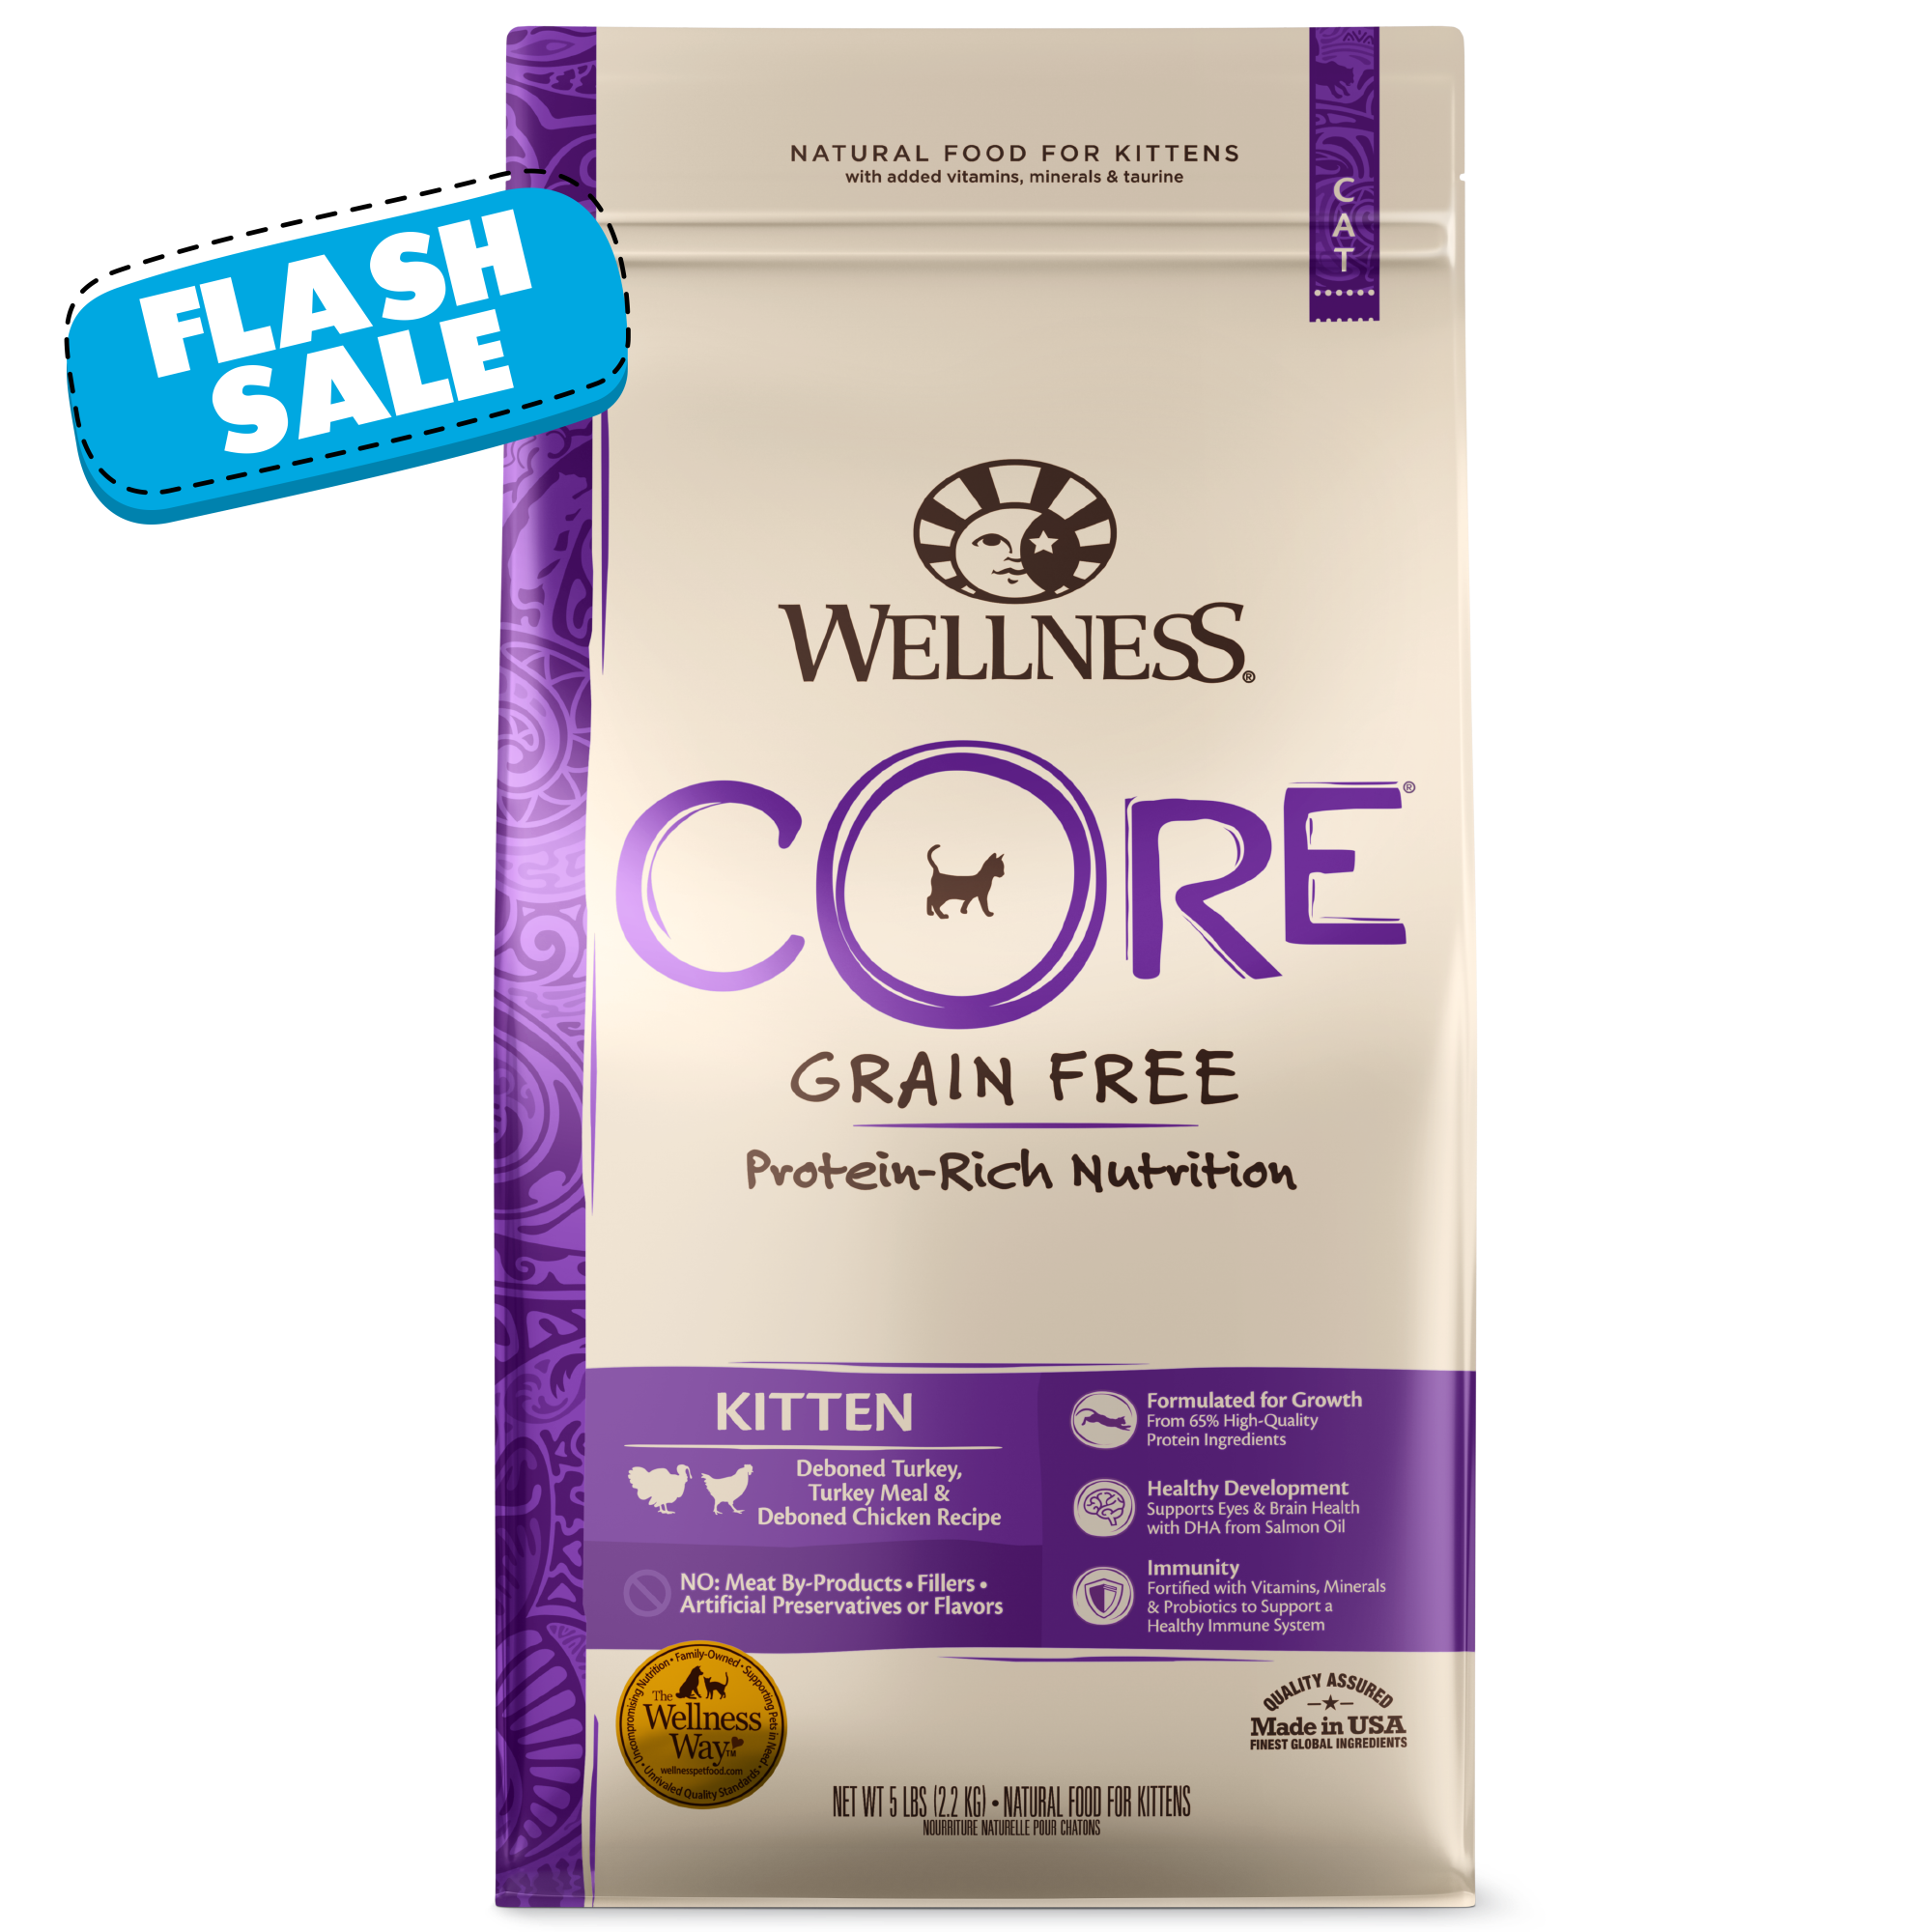 Wellness CORE幼貓糧- 無穀物幼貓配方  5lb (4包裝)